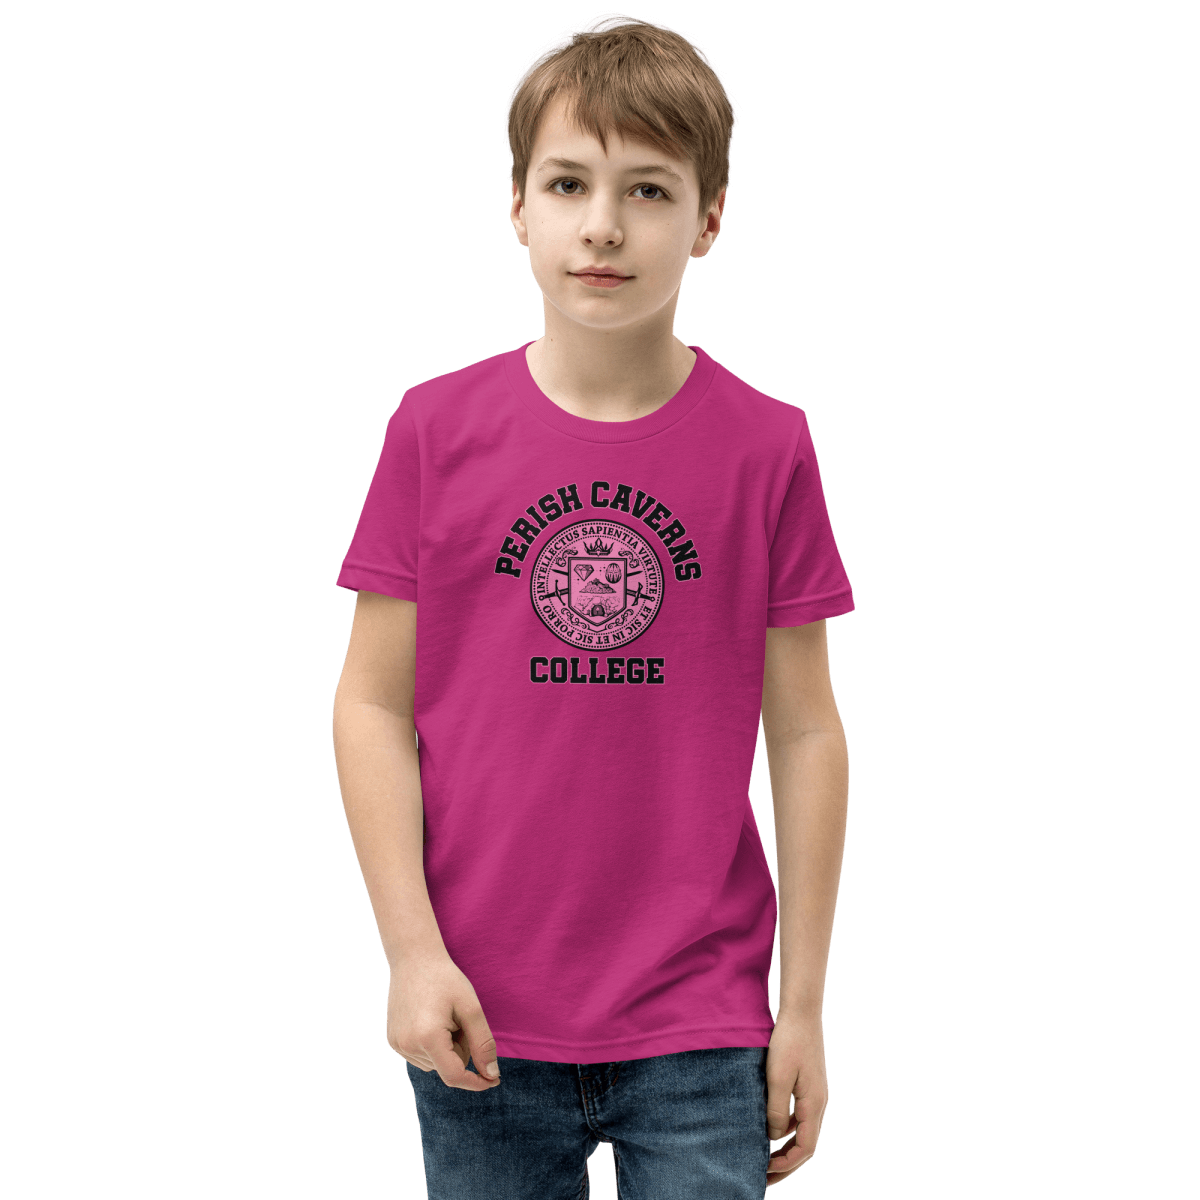 Perish Caverns College Crest Youth T-shirt - RG Halleck